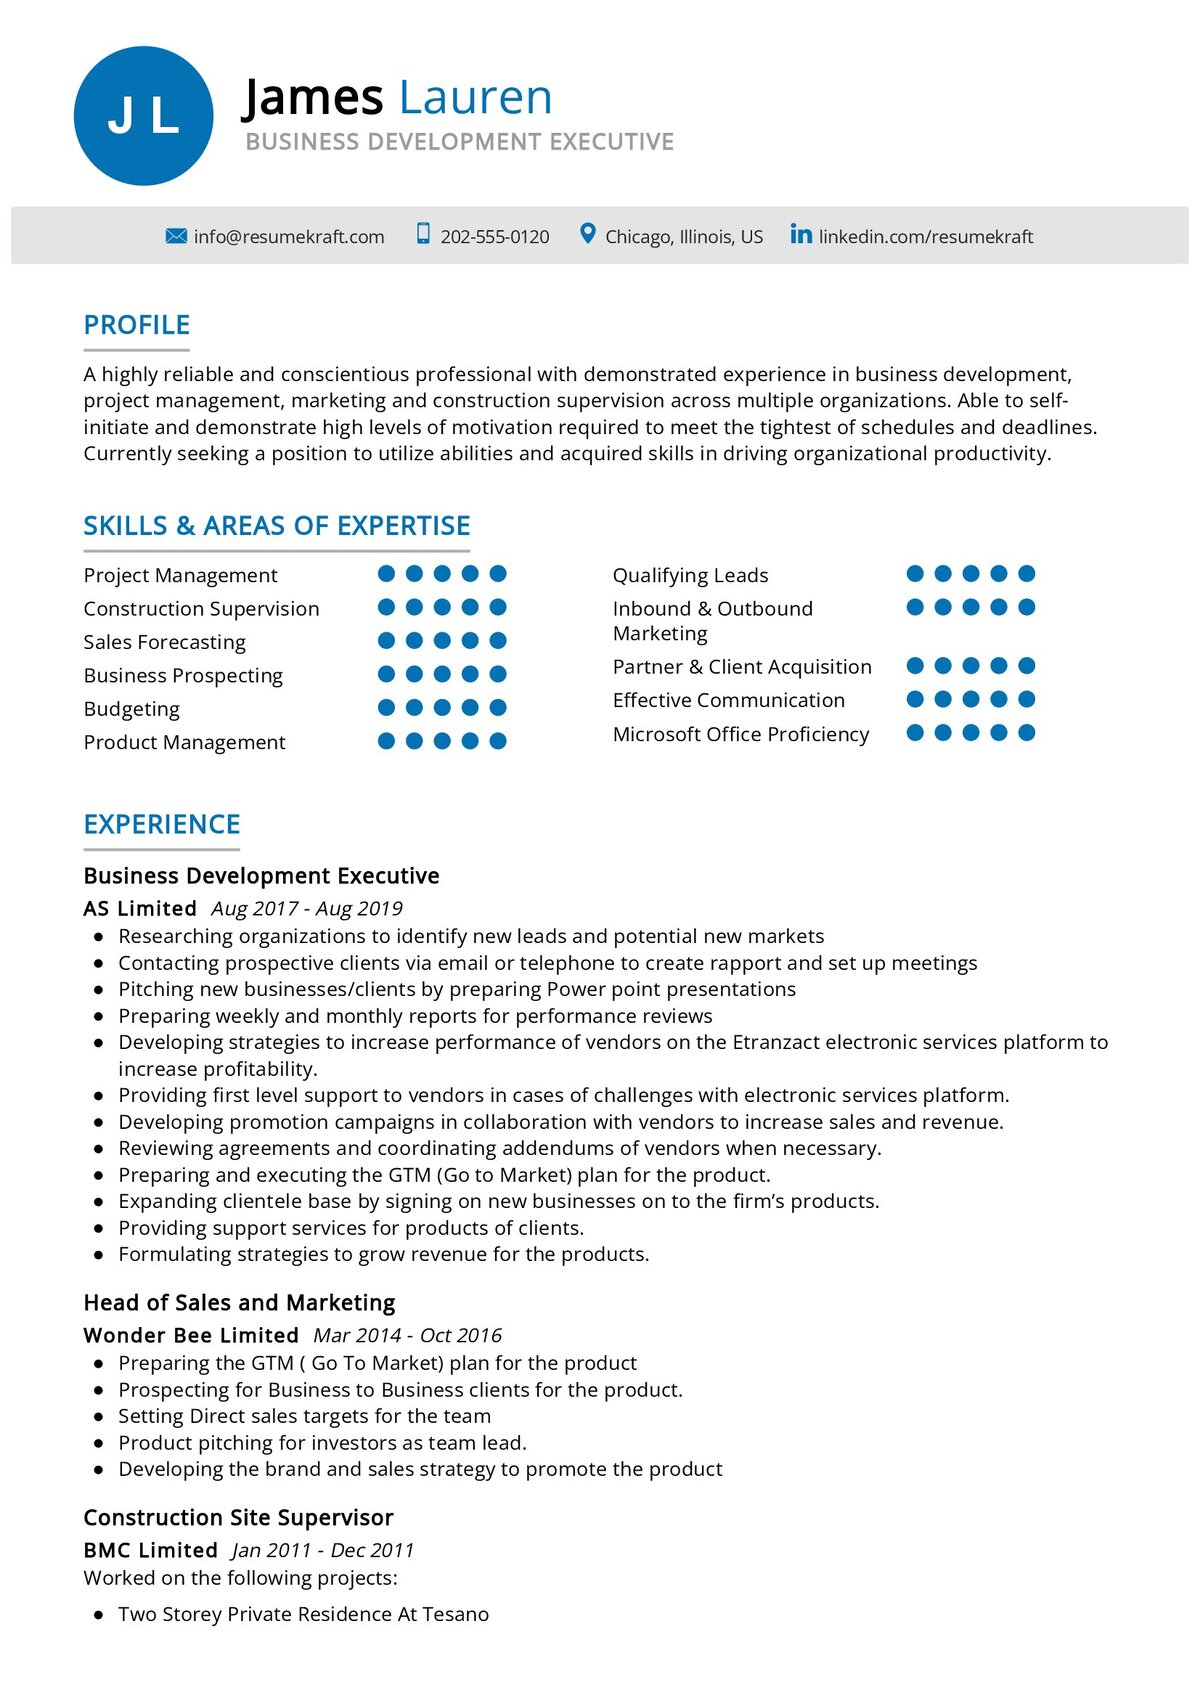 business development executive job description for resume